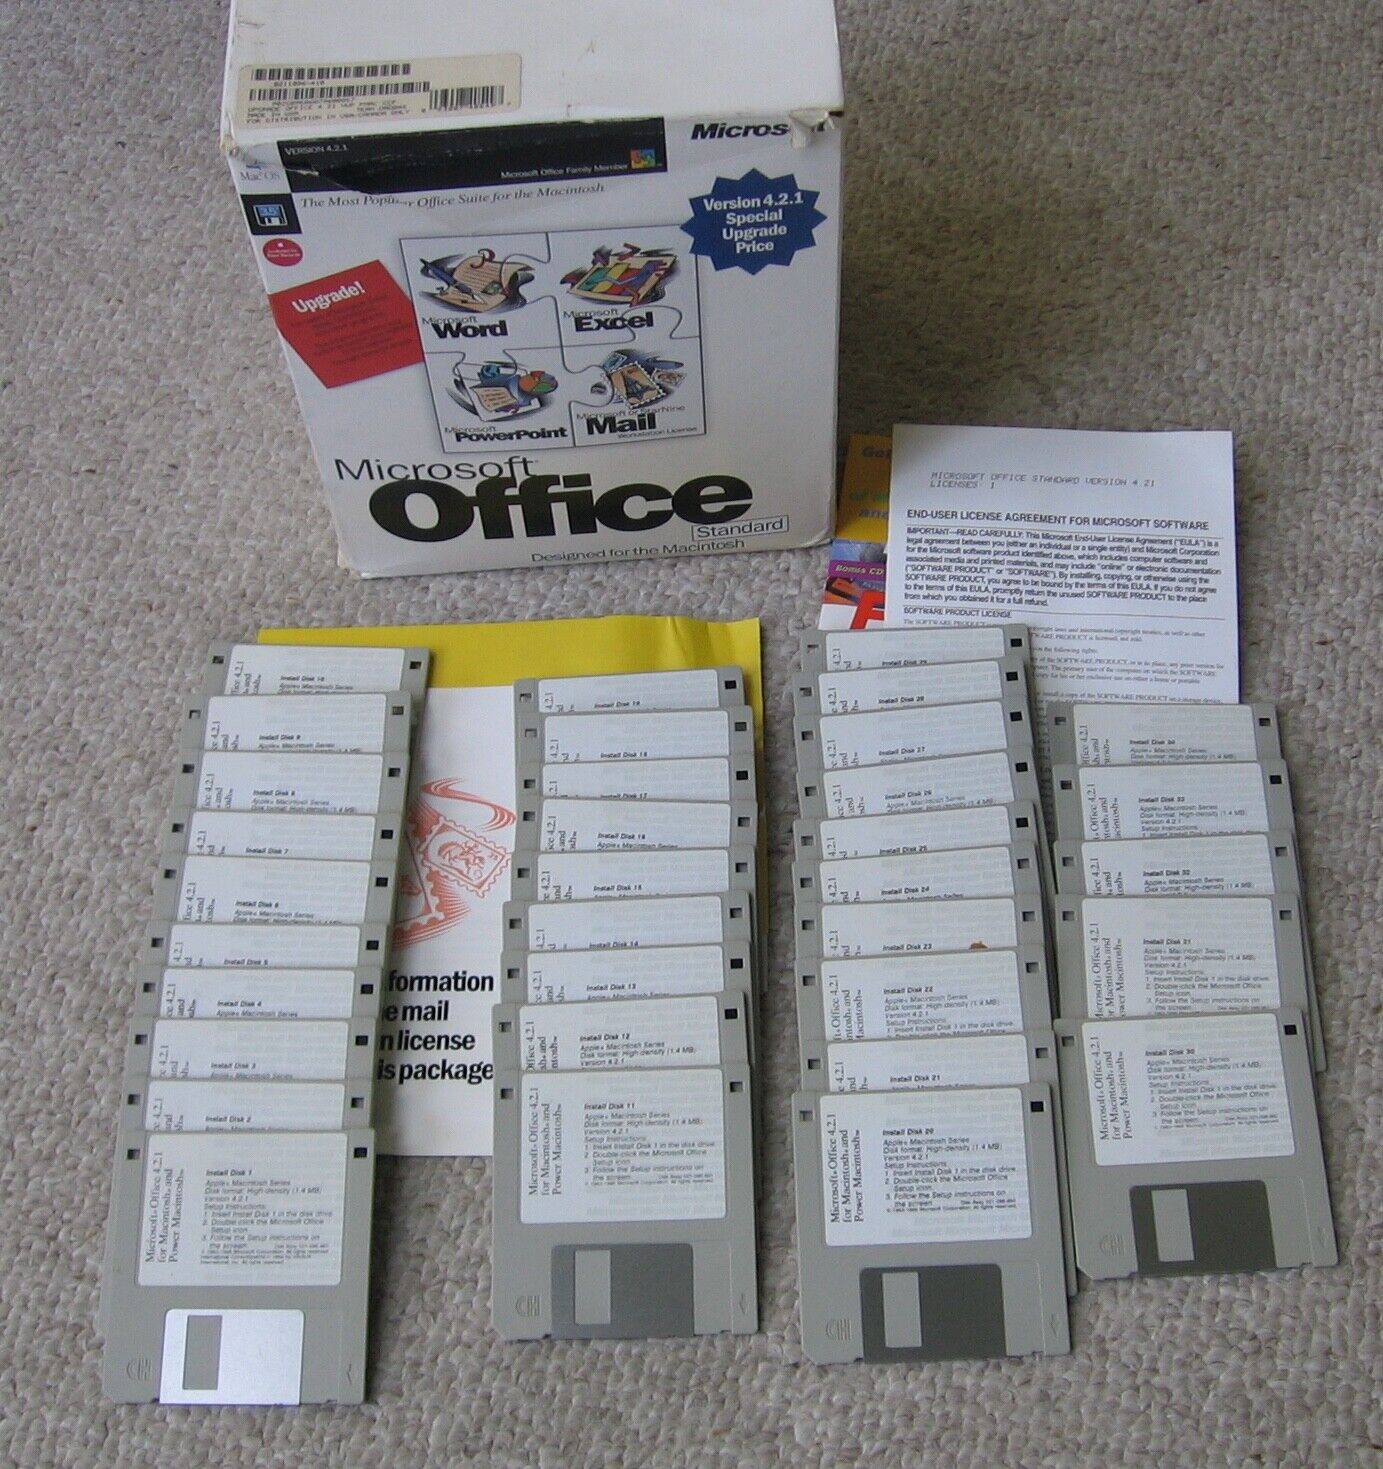 Microsoft Office 4.2.1 Standard Upgrade for Macintosh Apple Diskettes